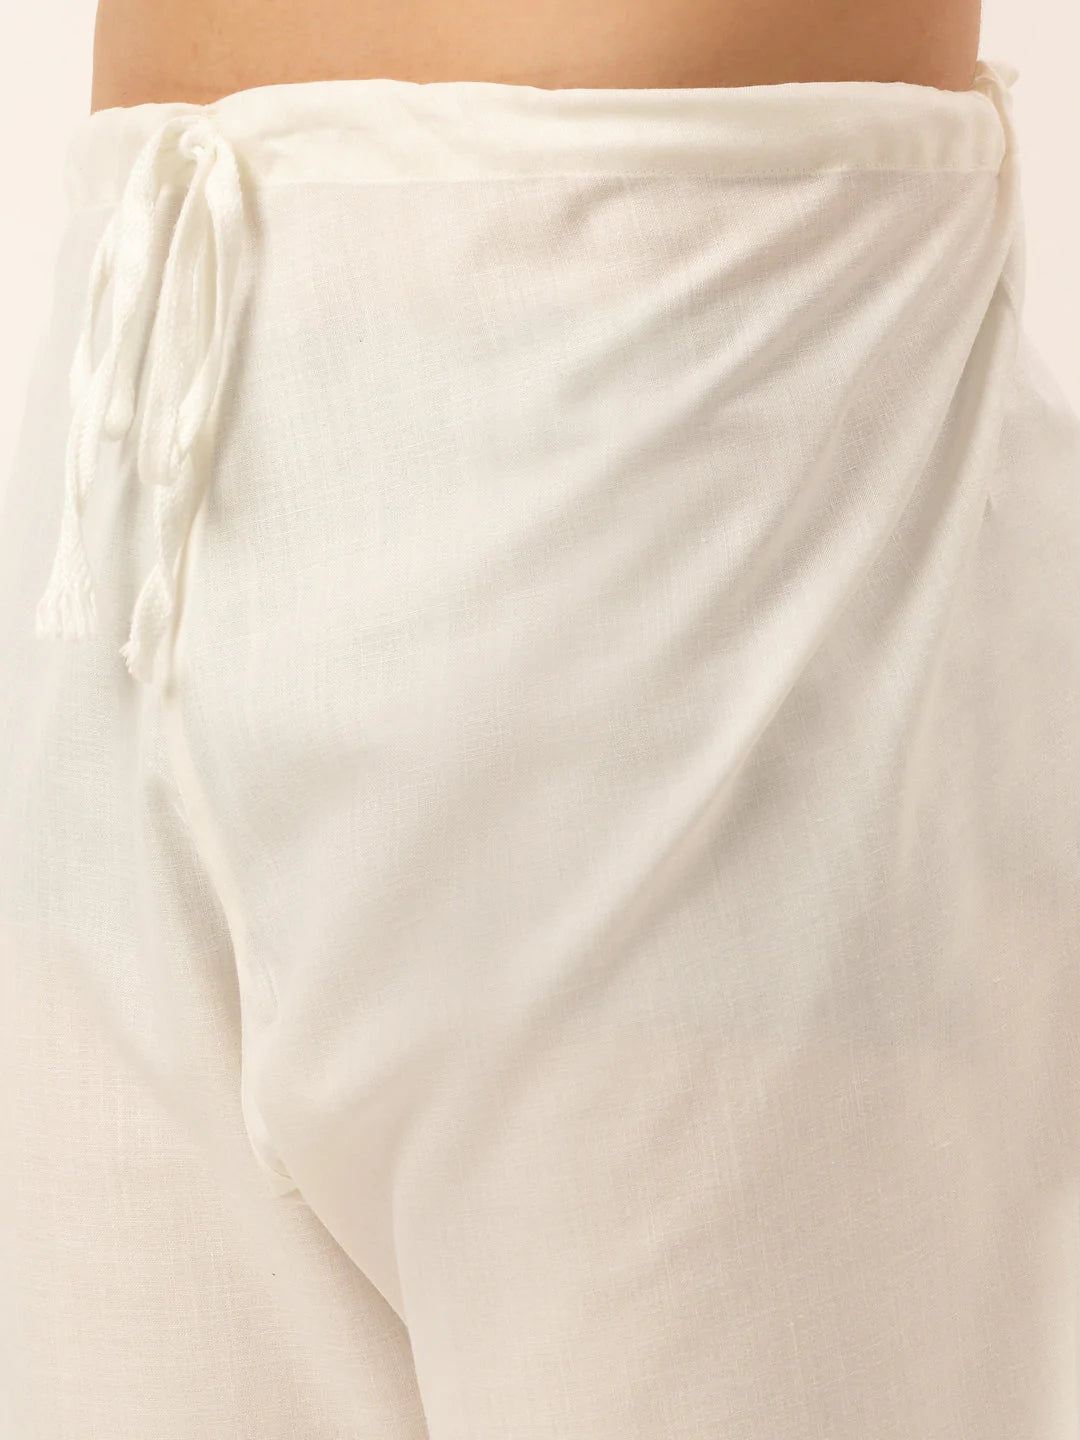 Men's Cotton Solid Kurta Pajama Set ( JOKP 657 Olive )